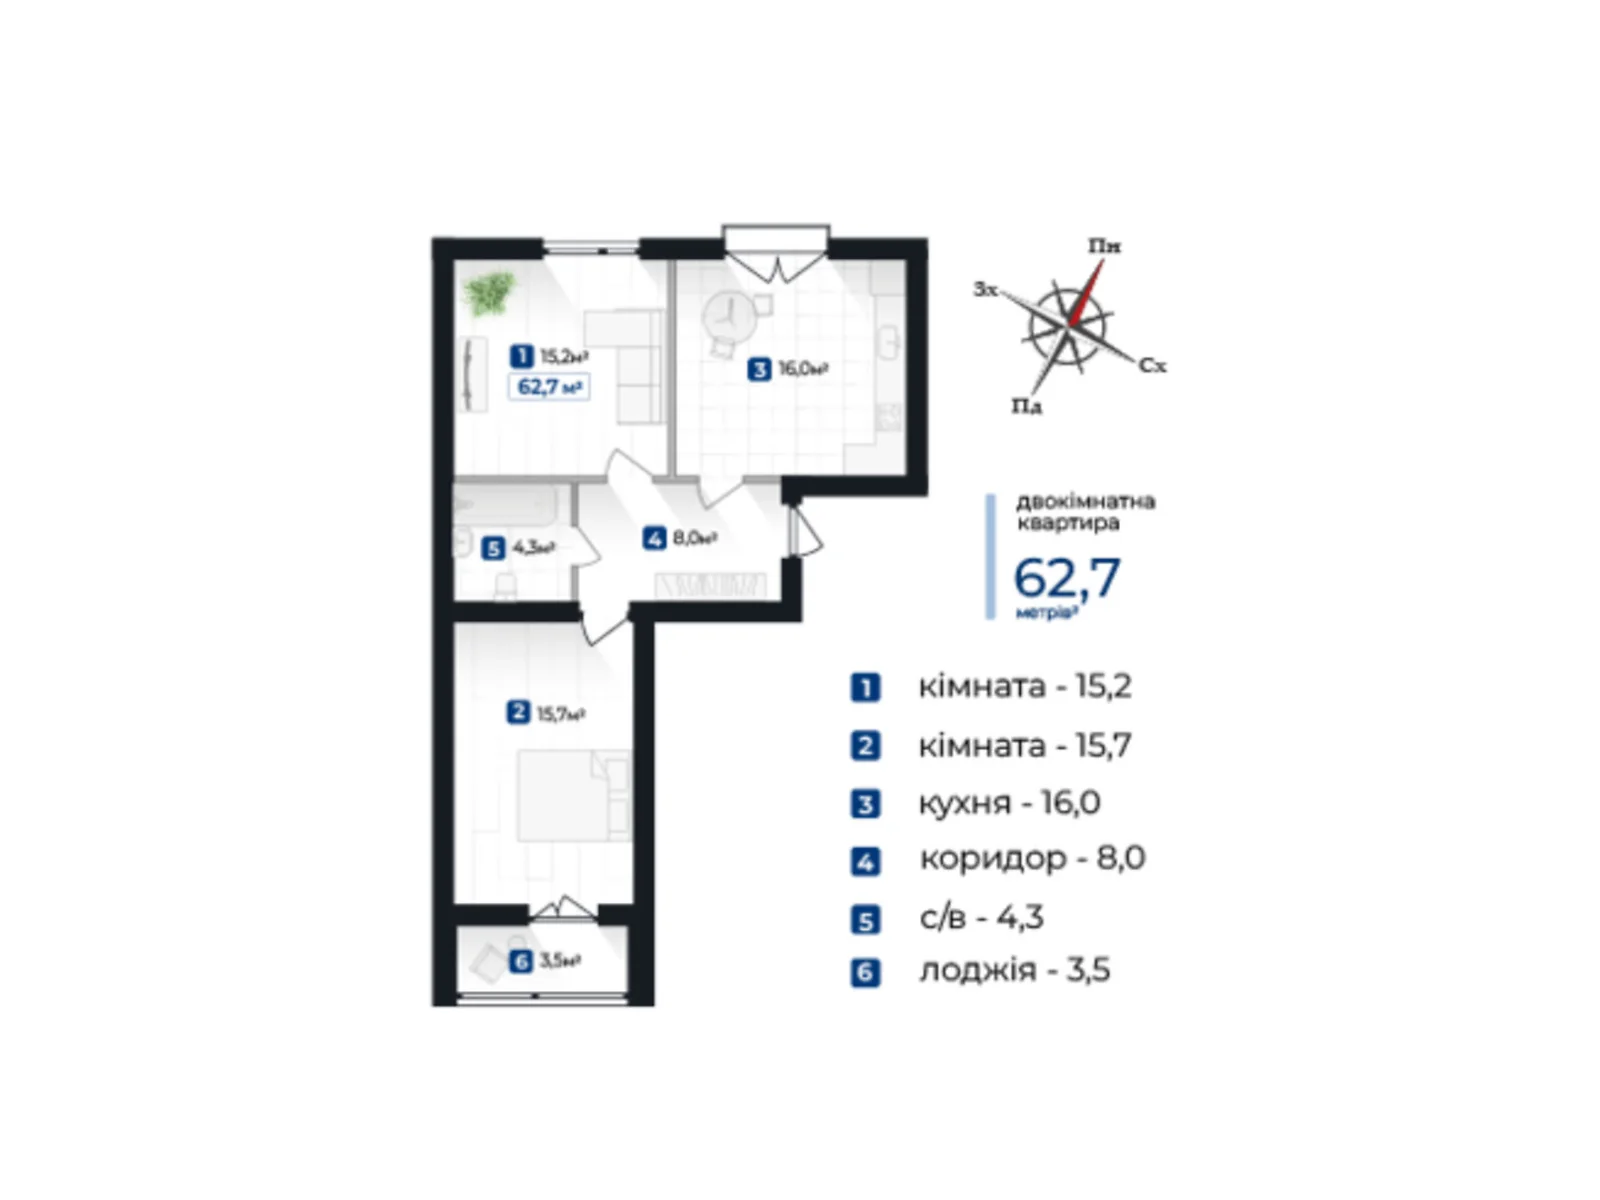 Продается 2-комнатная квартира 62.7 кв. м в Ивано-Франковске, цена: 48906 $